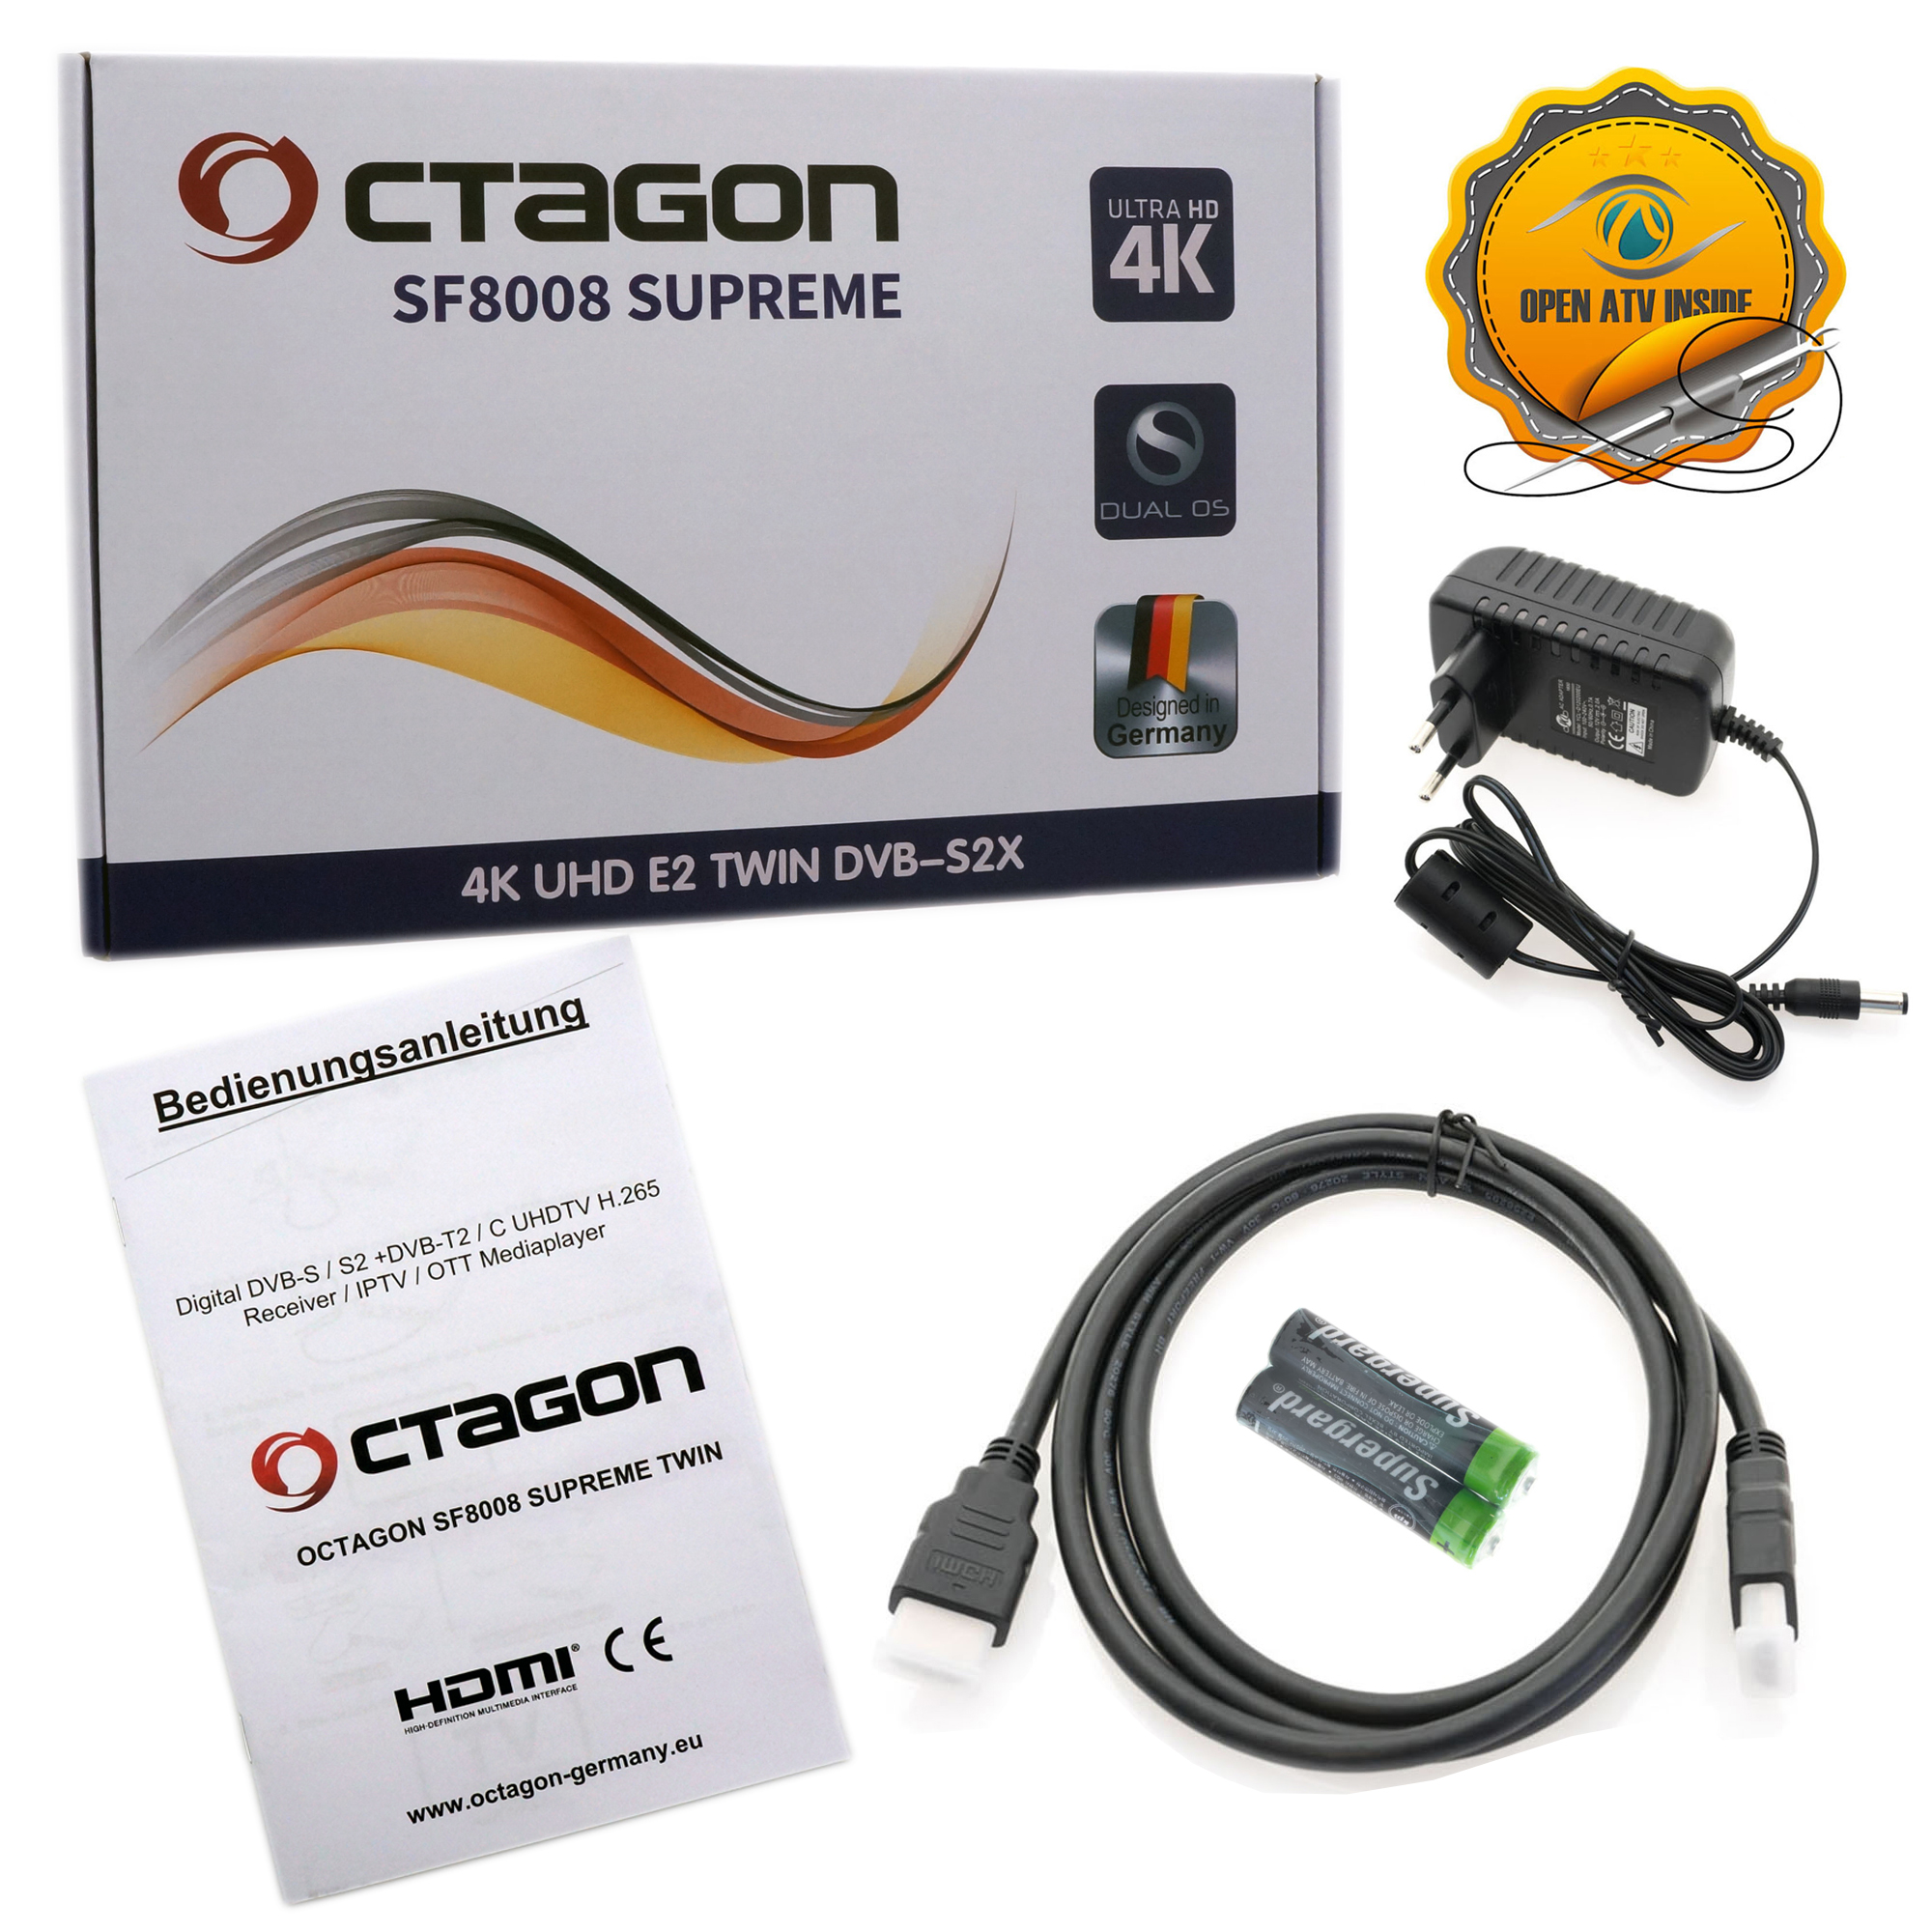 OCTAGON SF8008 Tuner, (PVR-Funktion, Twin Schwarz) Twin Sat-Receiver Supreme 256GB